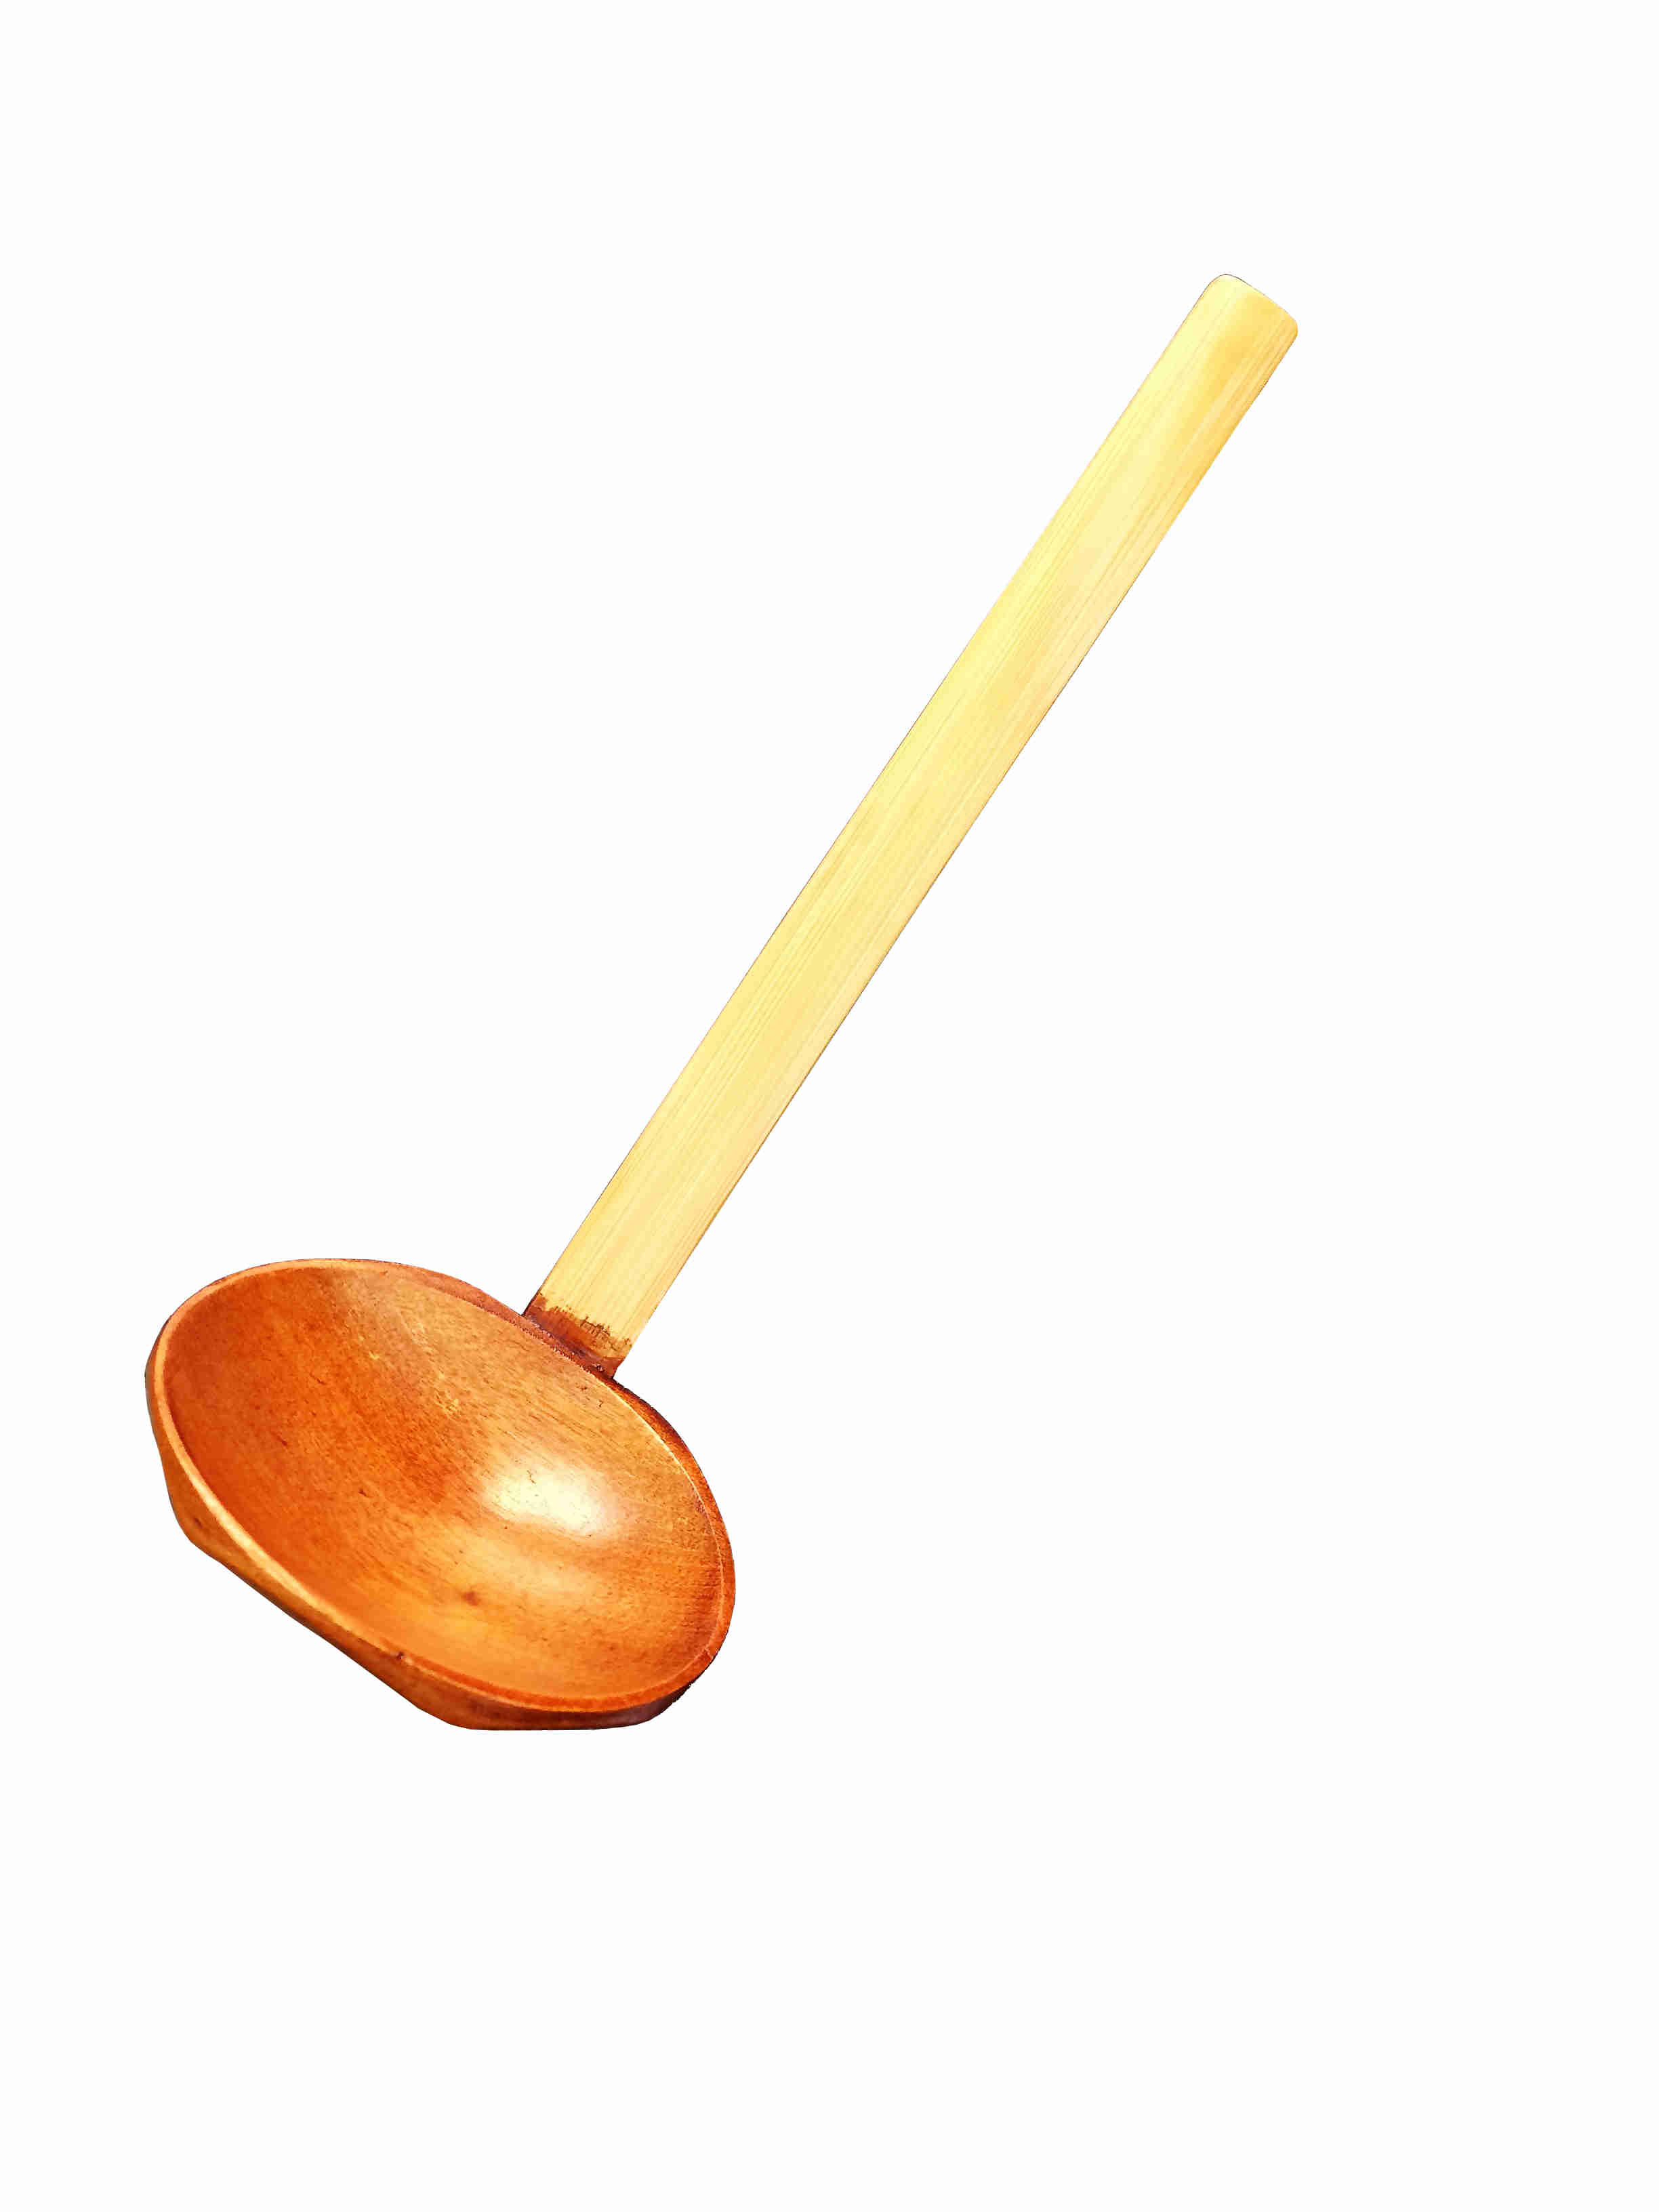 Bamboo ladle 